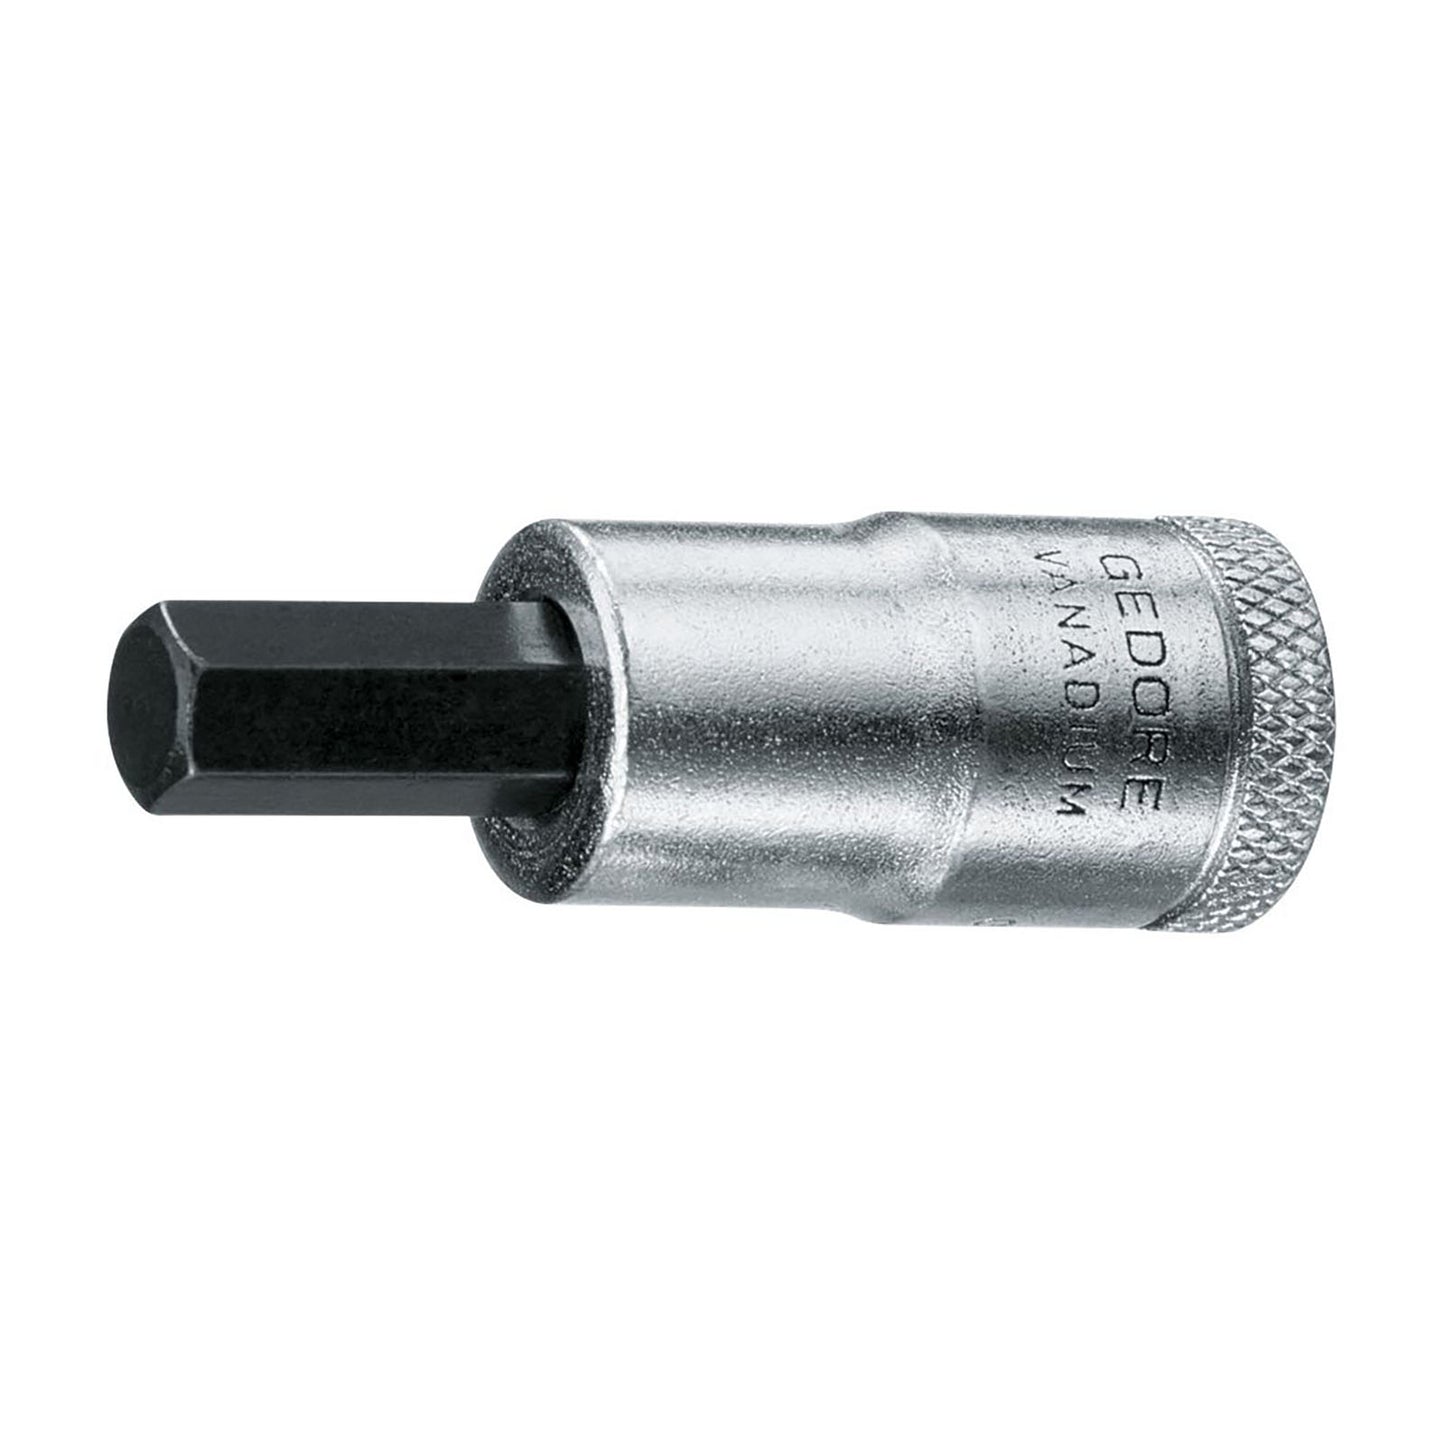 GEDORE IN 30 7 - INBUS® socket 3/8", 7 mm (1643037)